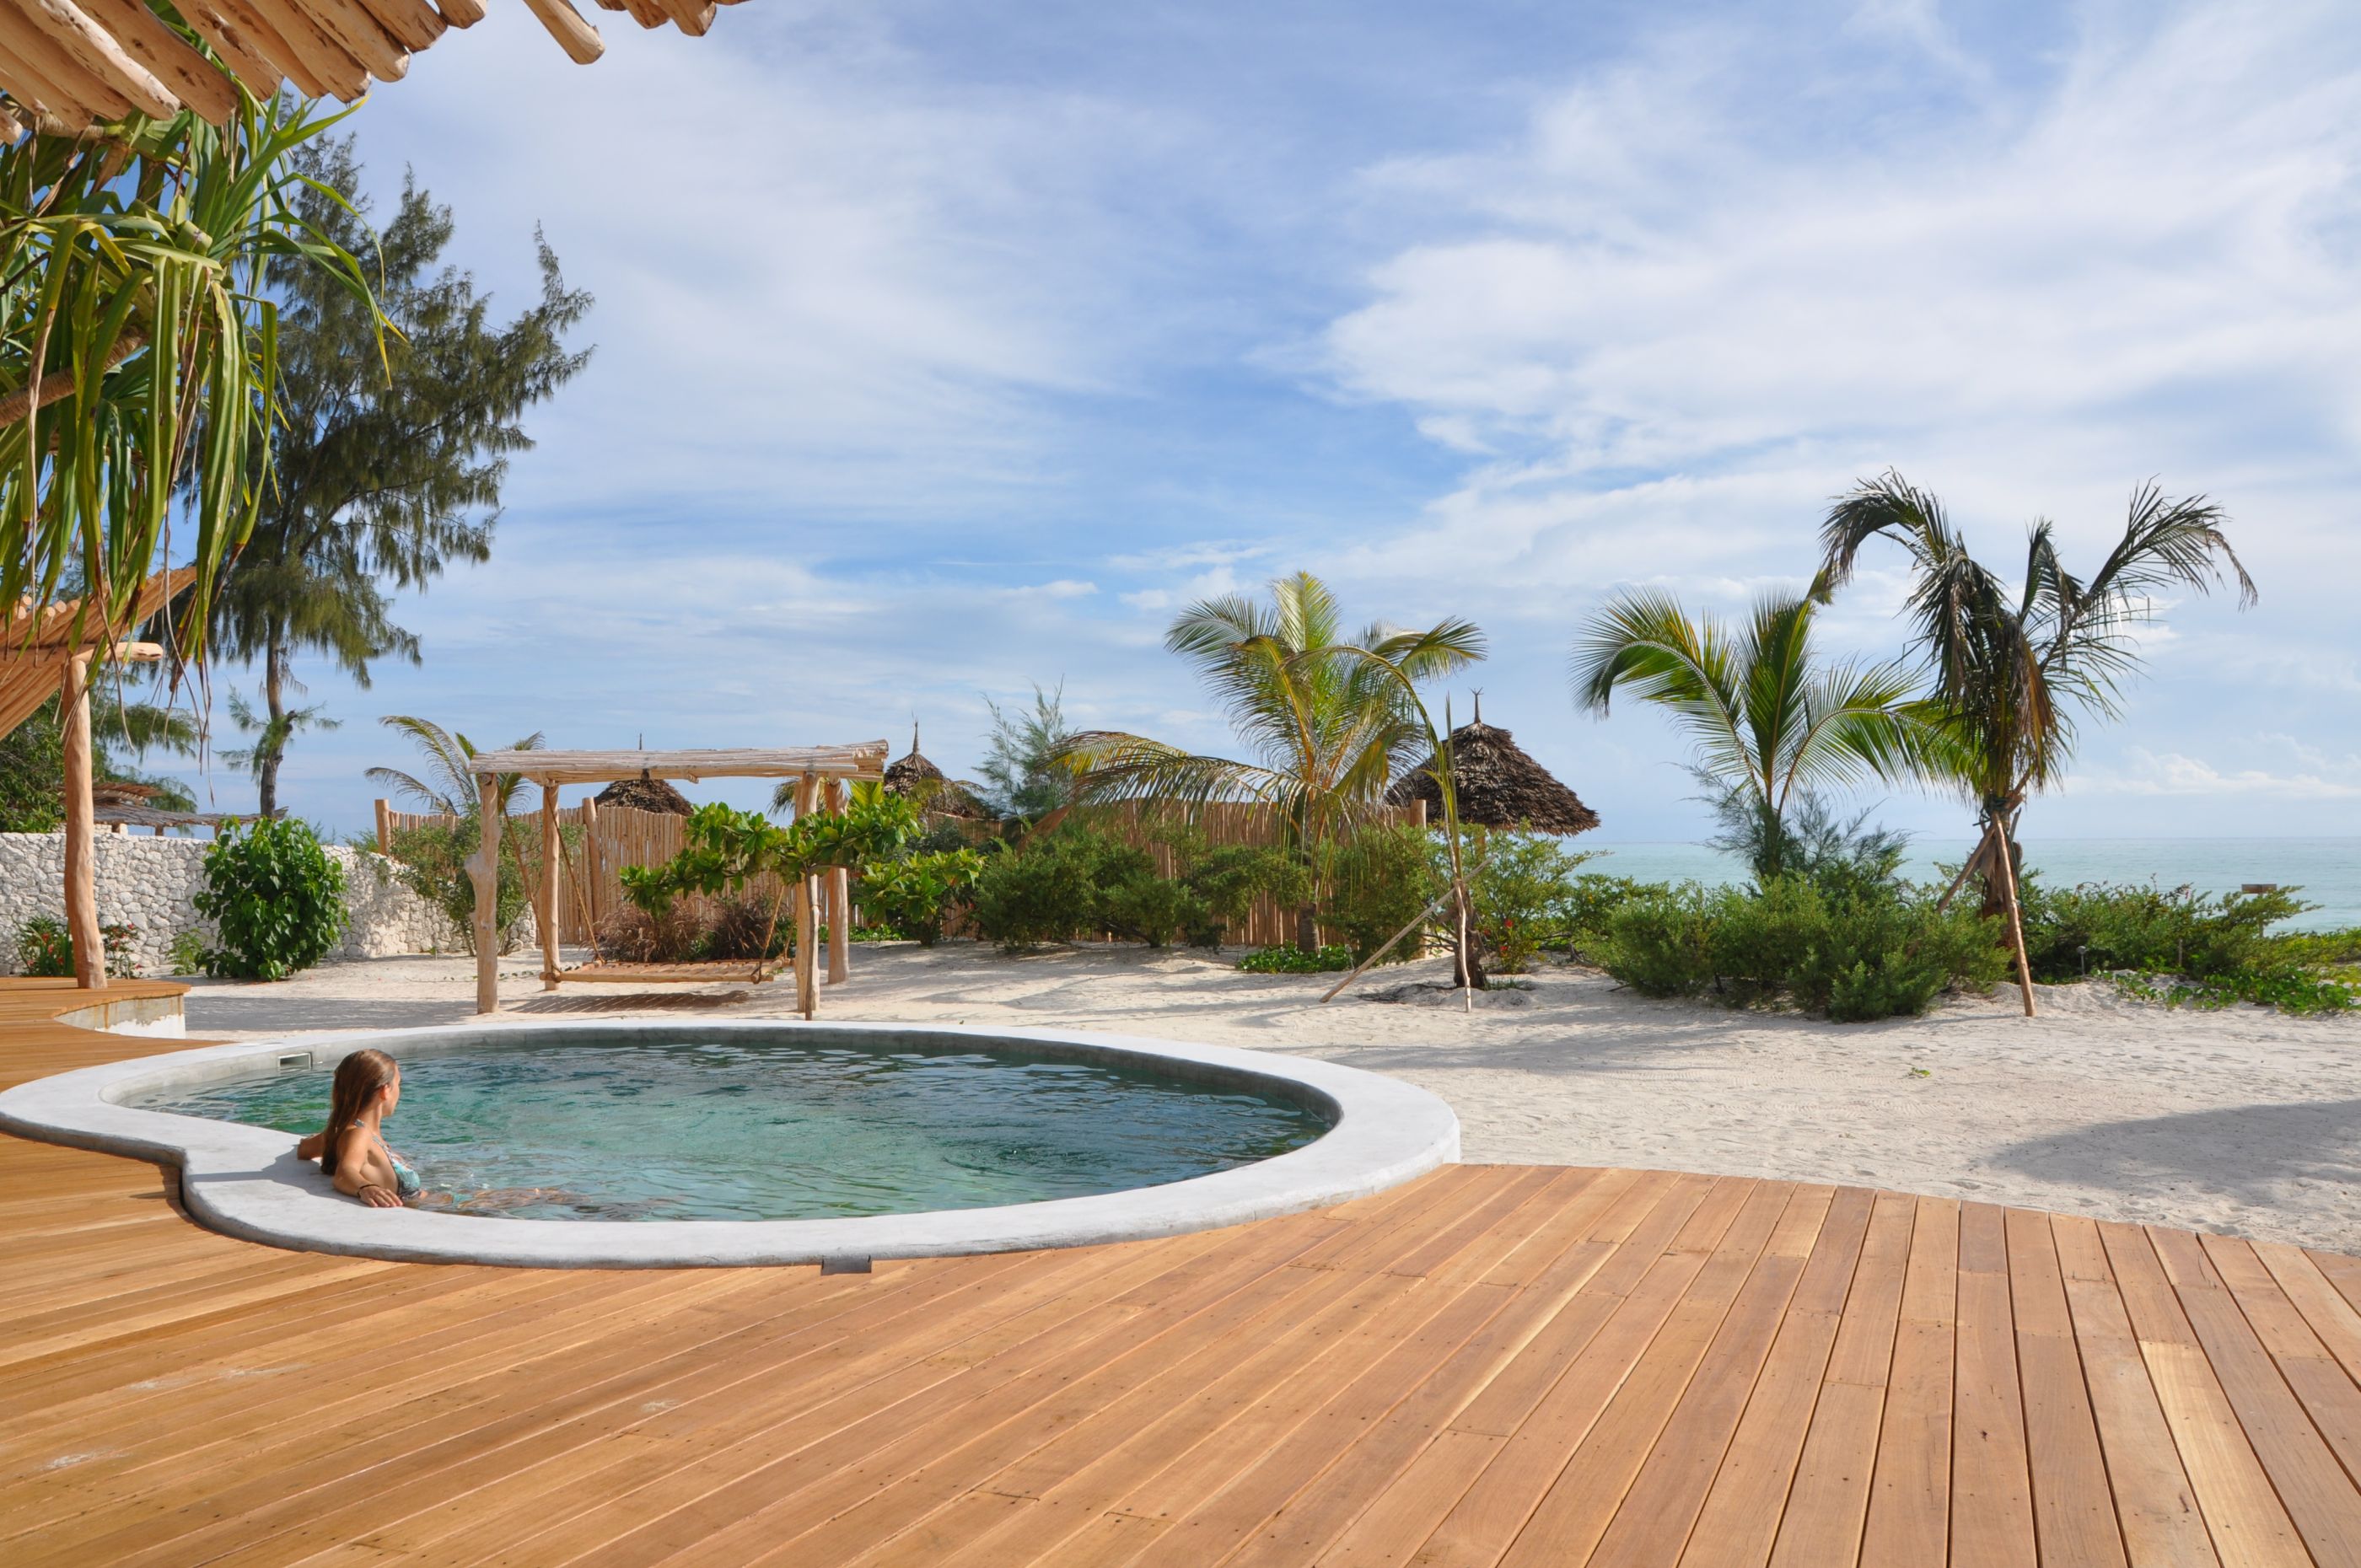 The pool at White Sands Luxury Villas in Zanzibar